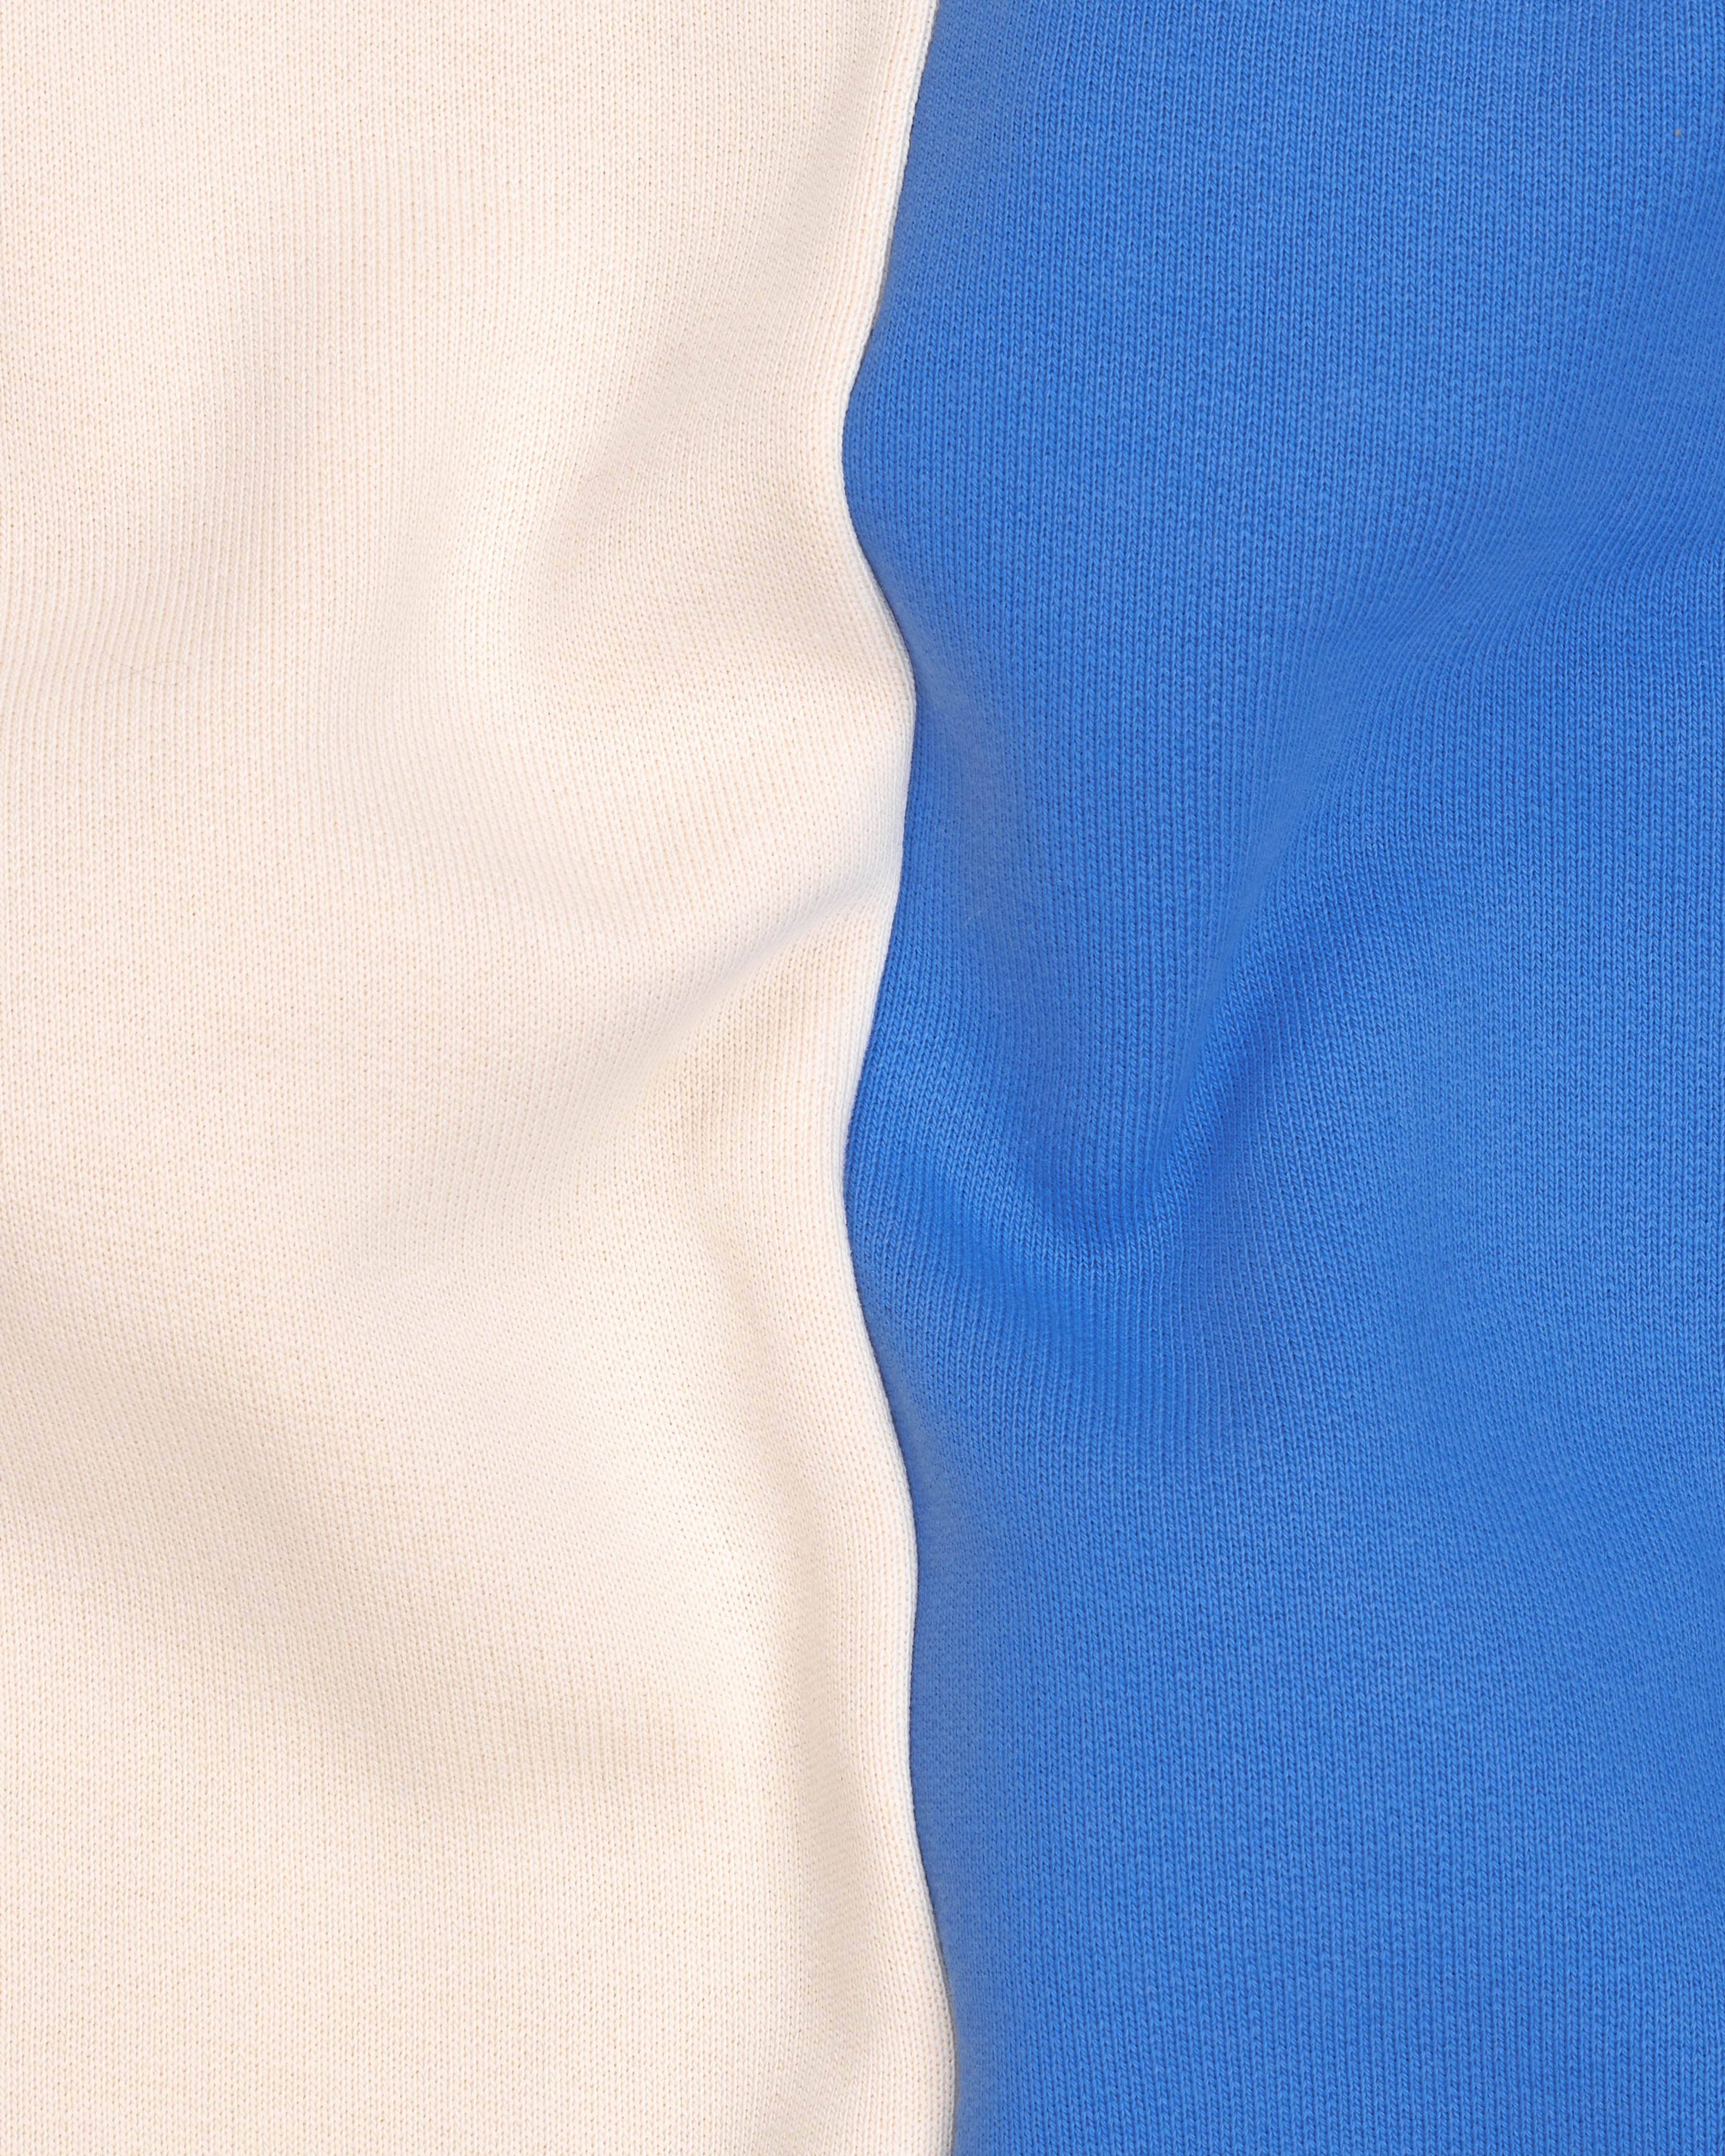 Blue With Cream Half and Half Full Sleeve Premium Cotton Heavyweight Hooded Sweatshirt TS642-B, TS642-M, TS642-A, TS642-XL, TS642-XXL, TS642-3XL, TS642-4XL